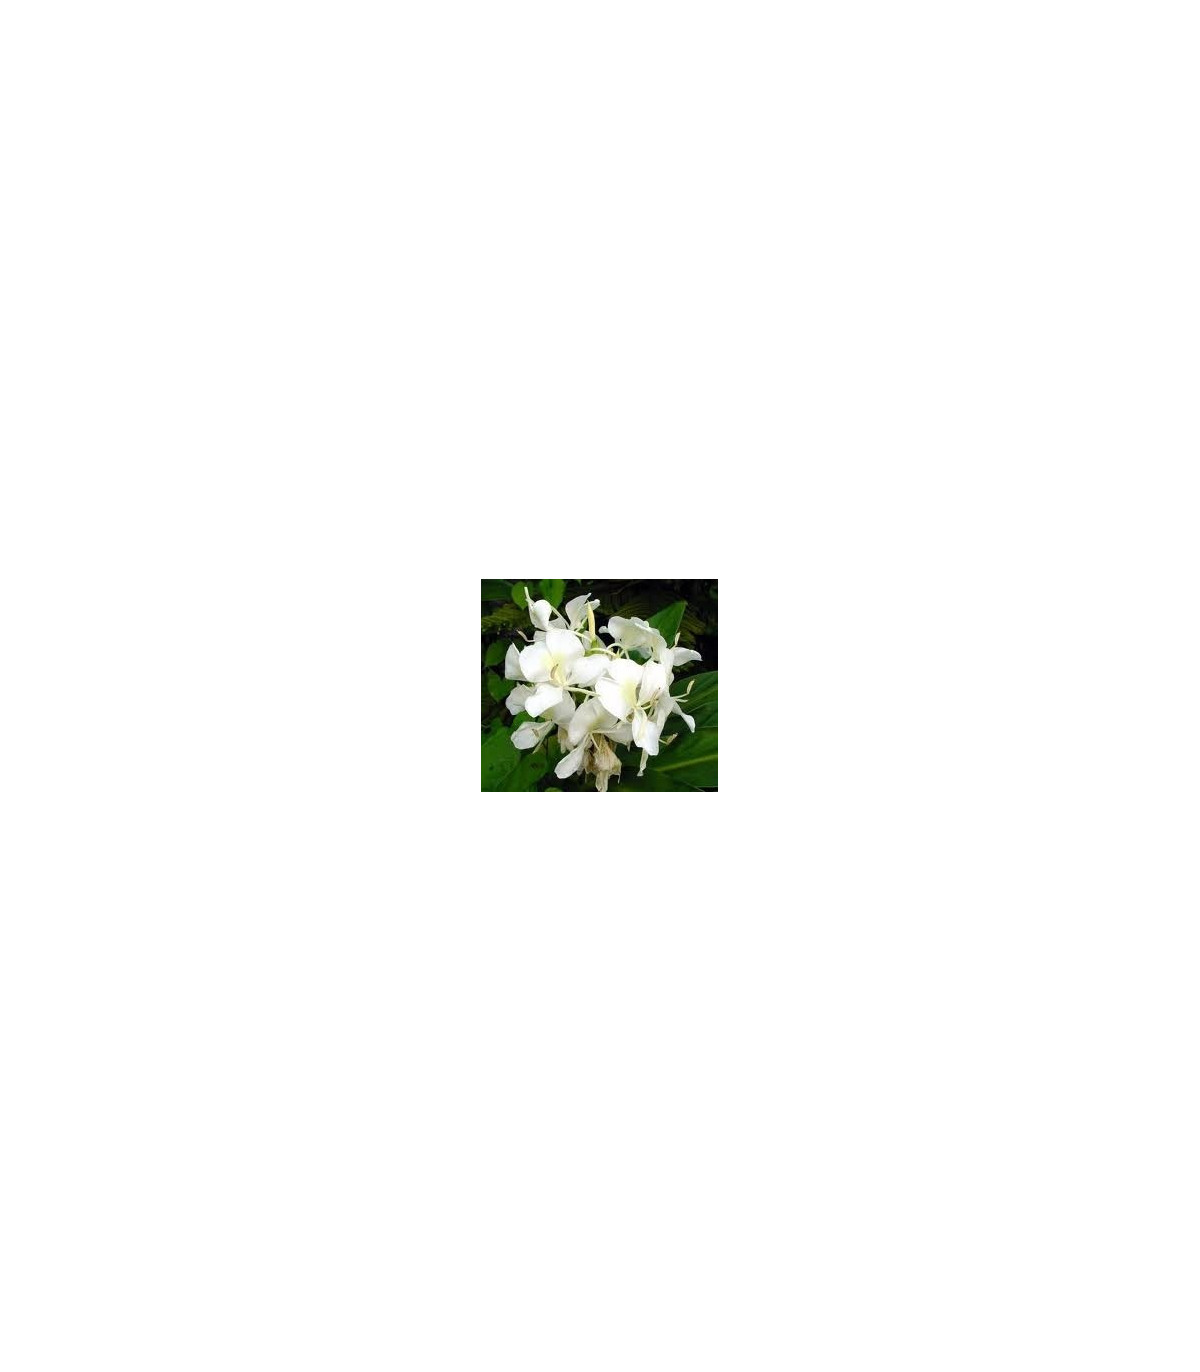 Biely zázvor - Hedychium coronarium - semená zázvoru - 4 ks